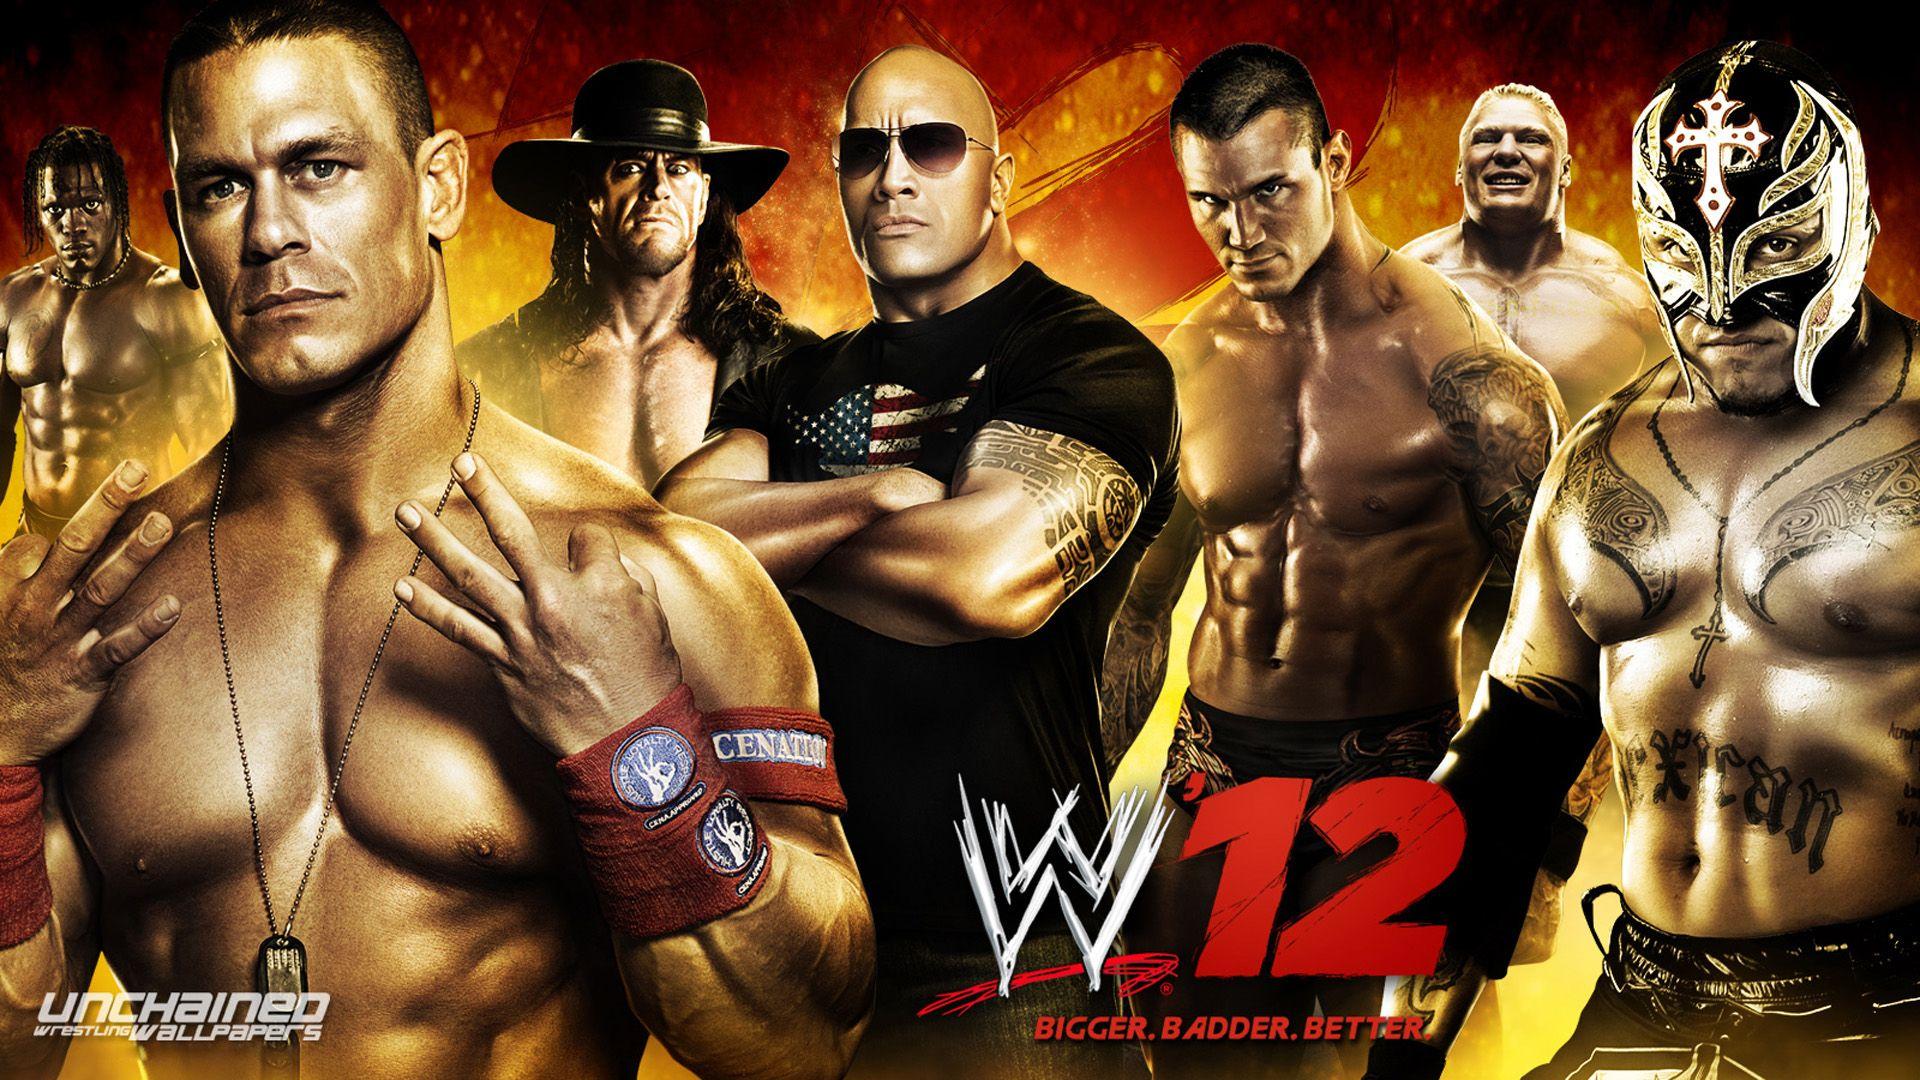 Best WWE HD wallpaper for Download. TechPandey Technology Blog